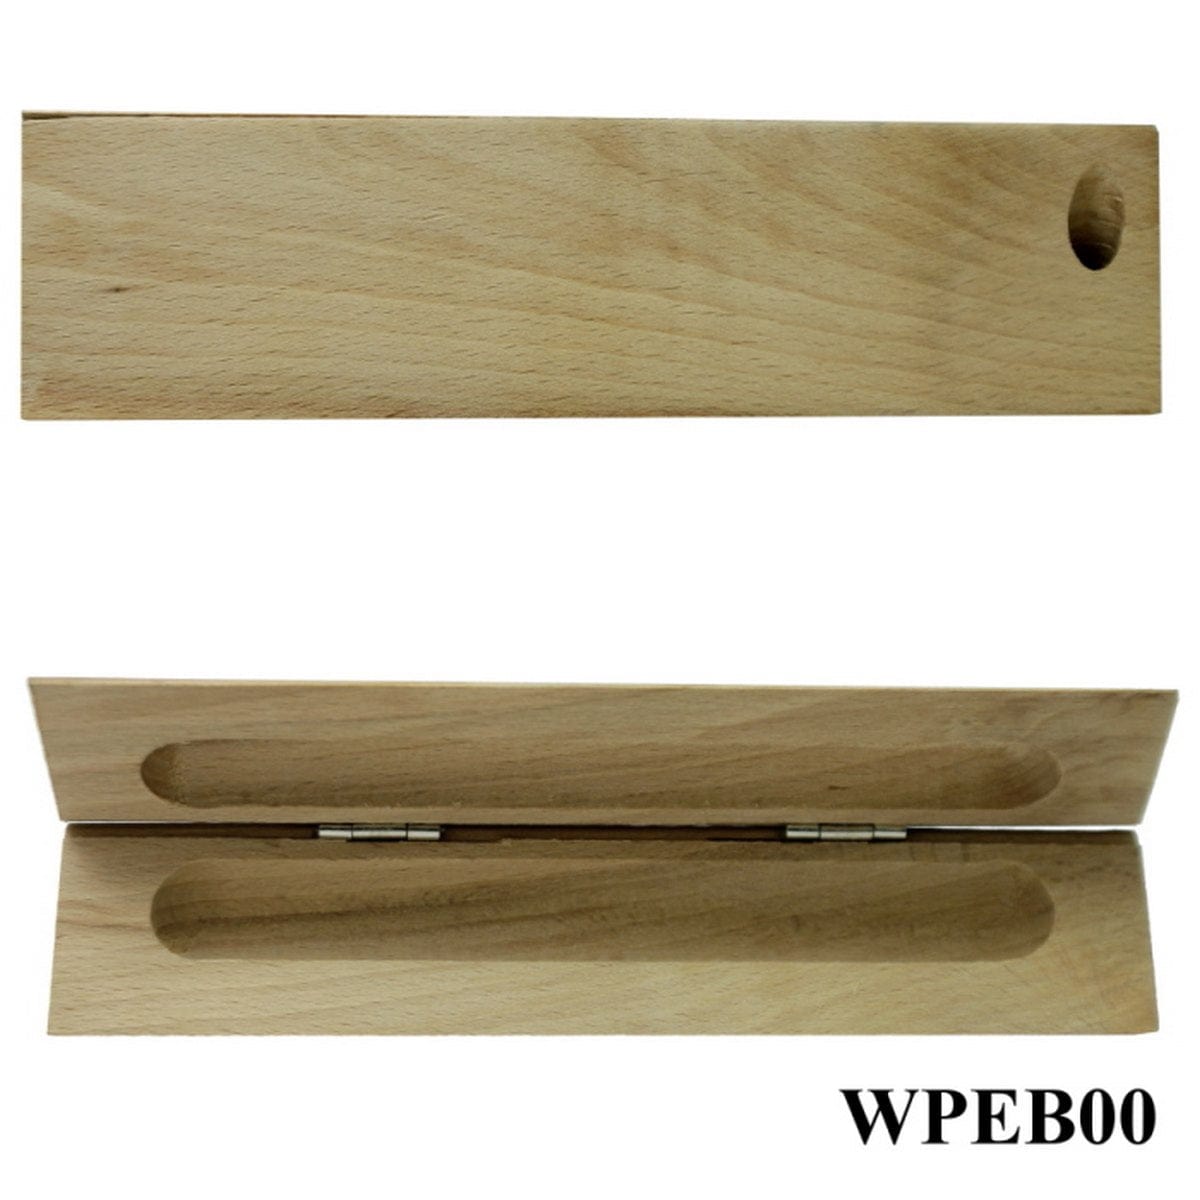 jags-mumbai Wooden Box Wooden Single Pen Empty Box for Classic and Elegant Storage